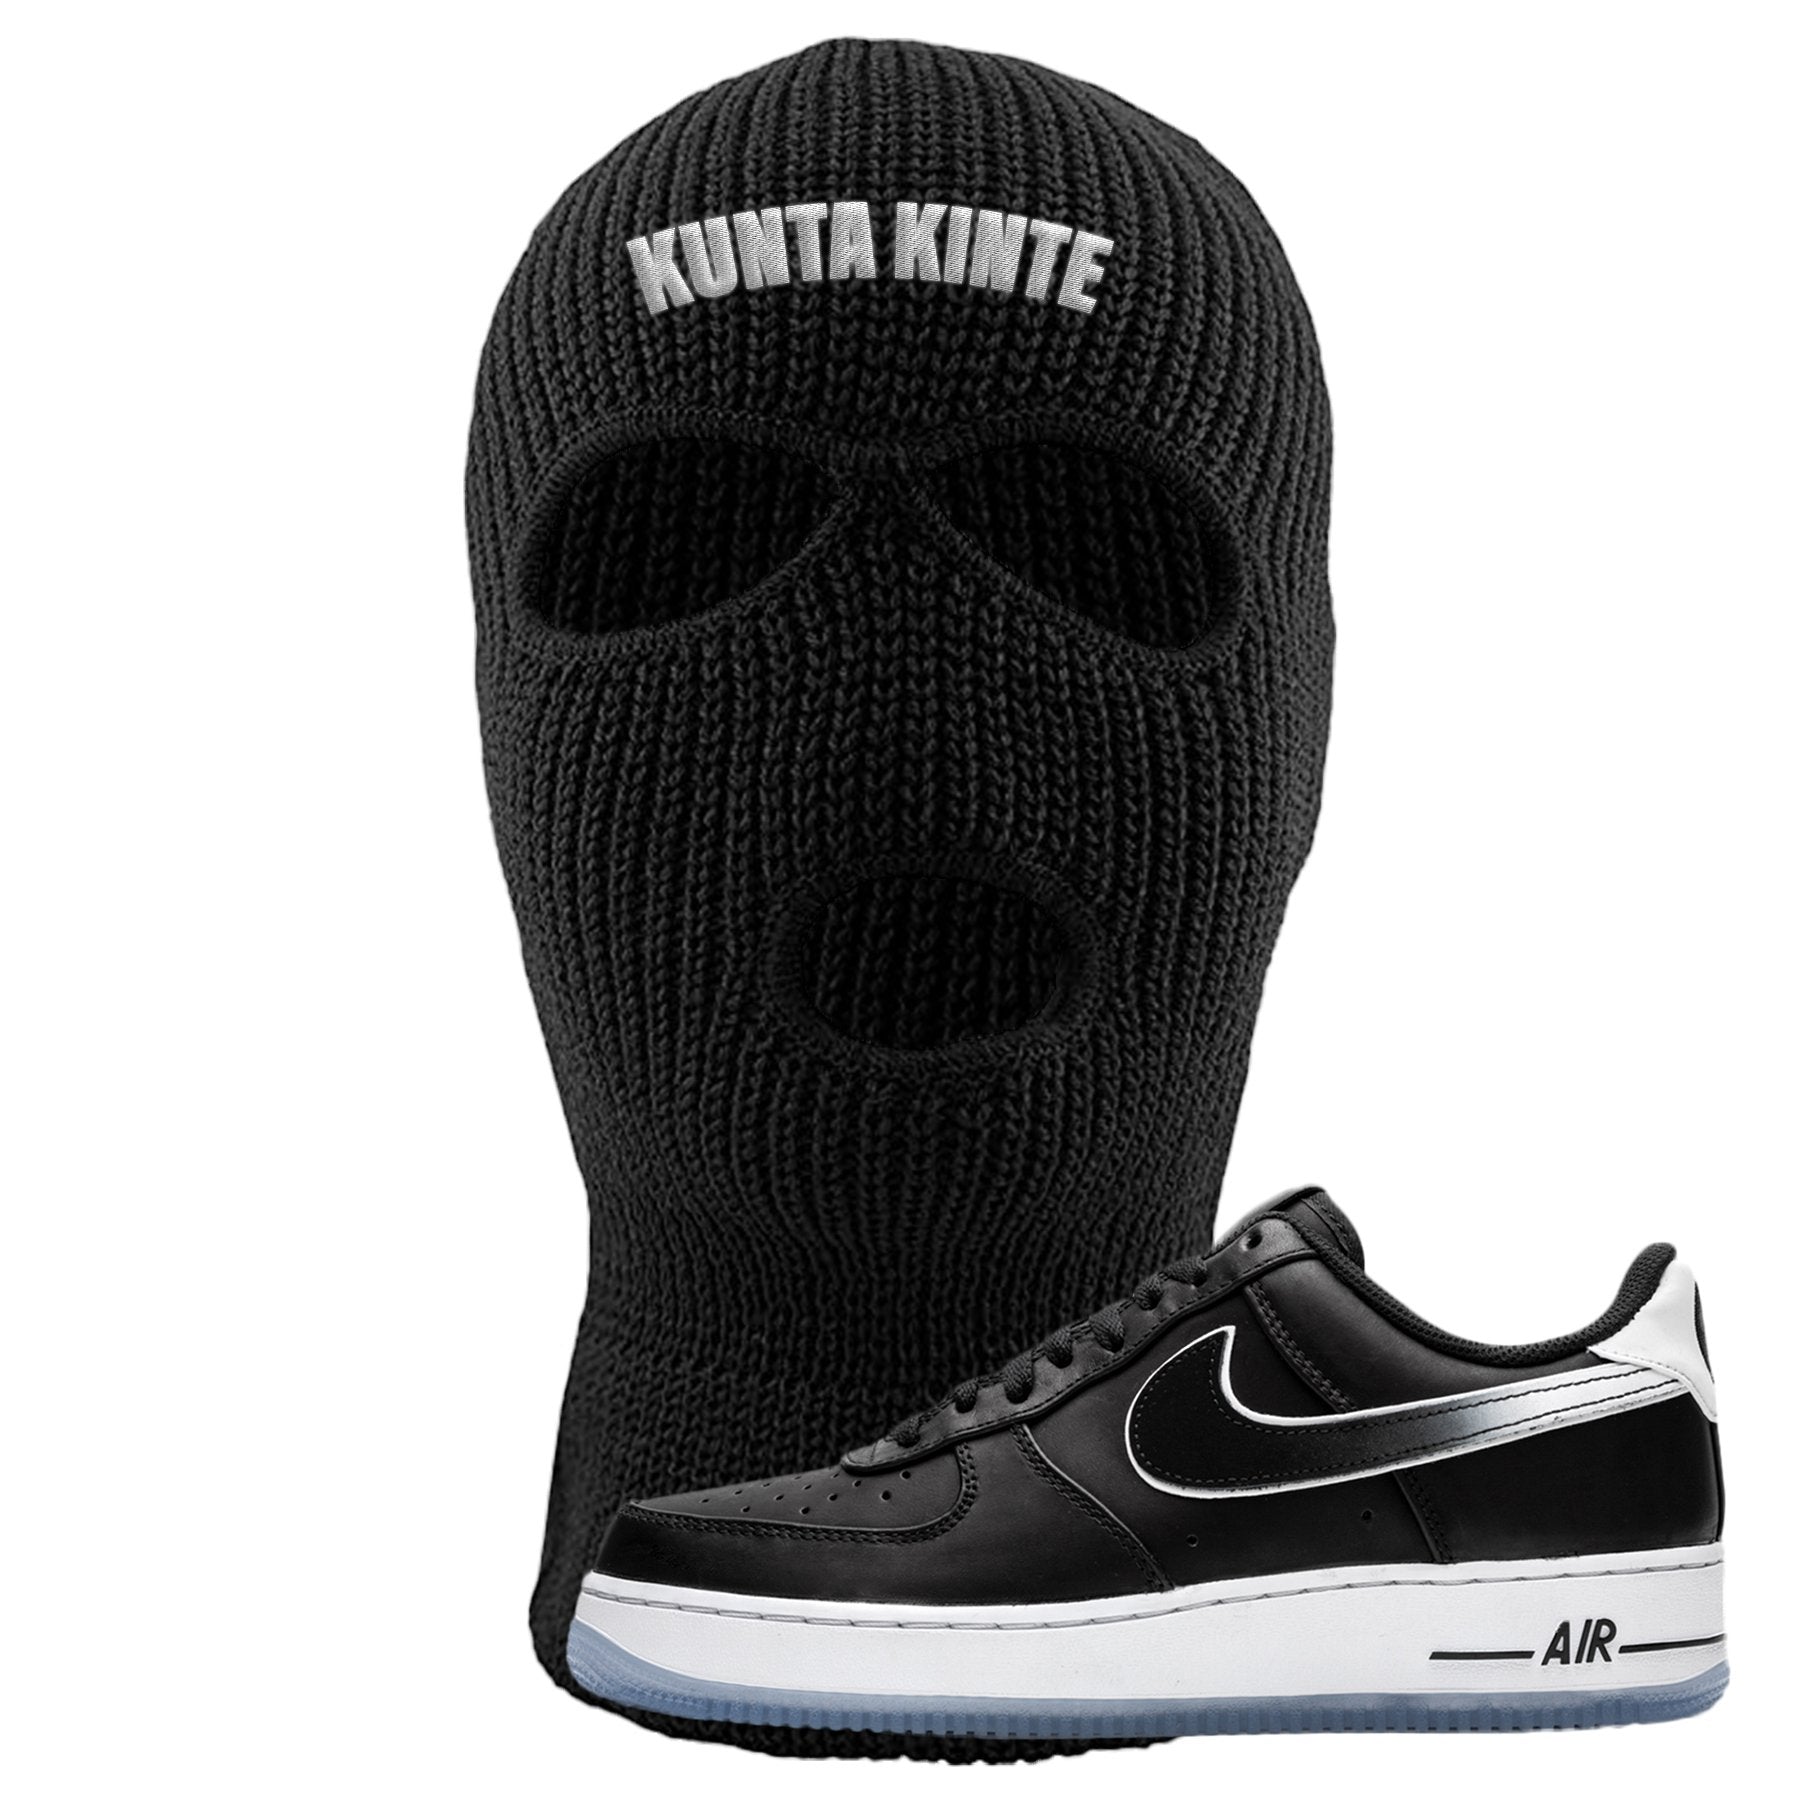 Colin Kaepernick X Air Force 1 Low Kunta Kinte Black Sneaker Hook Up Ski Mask